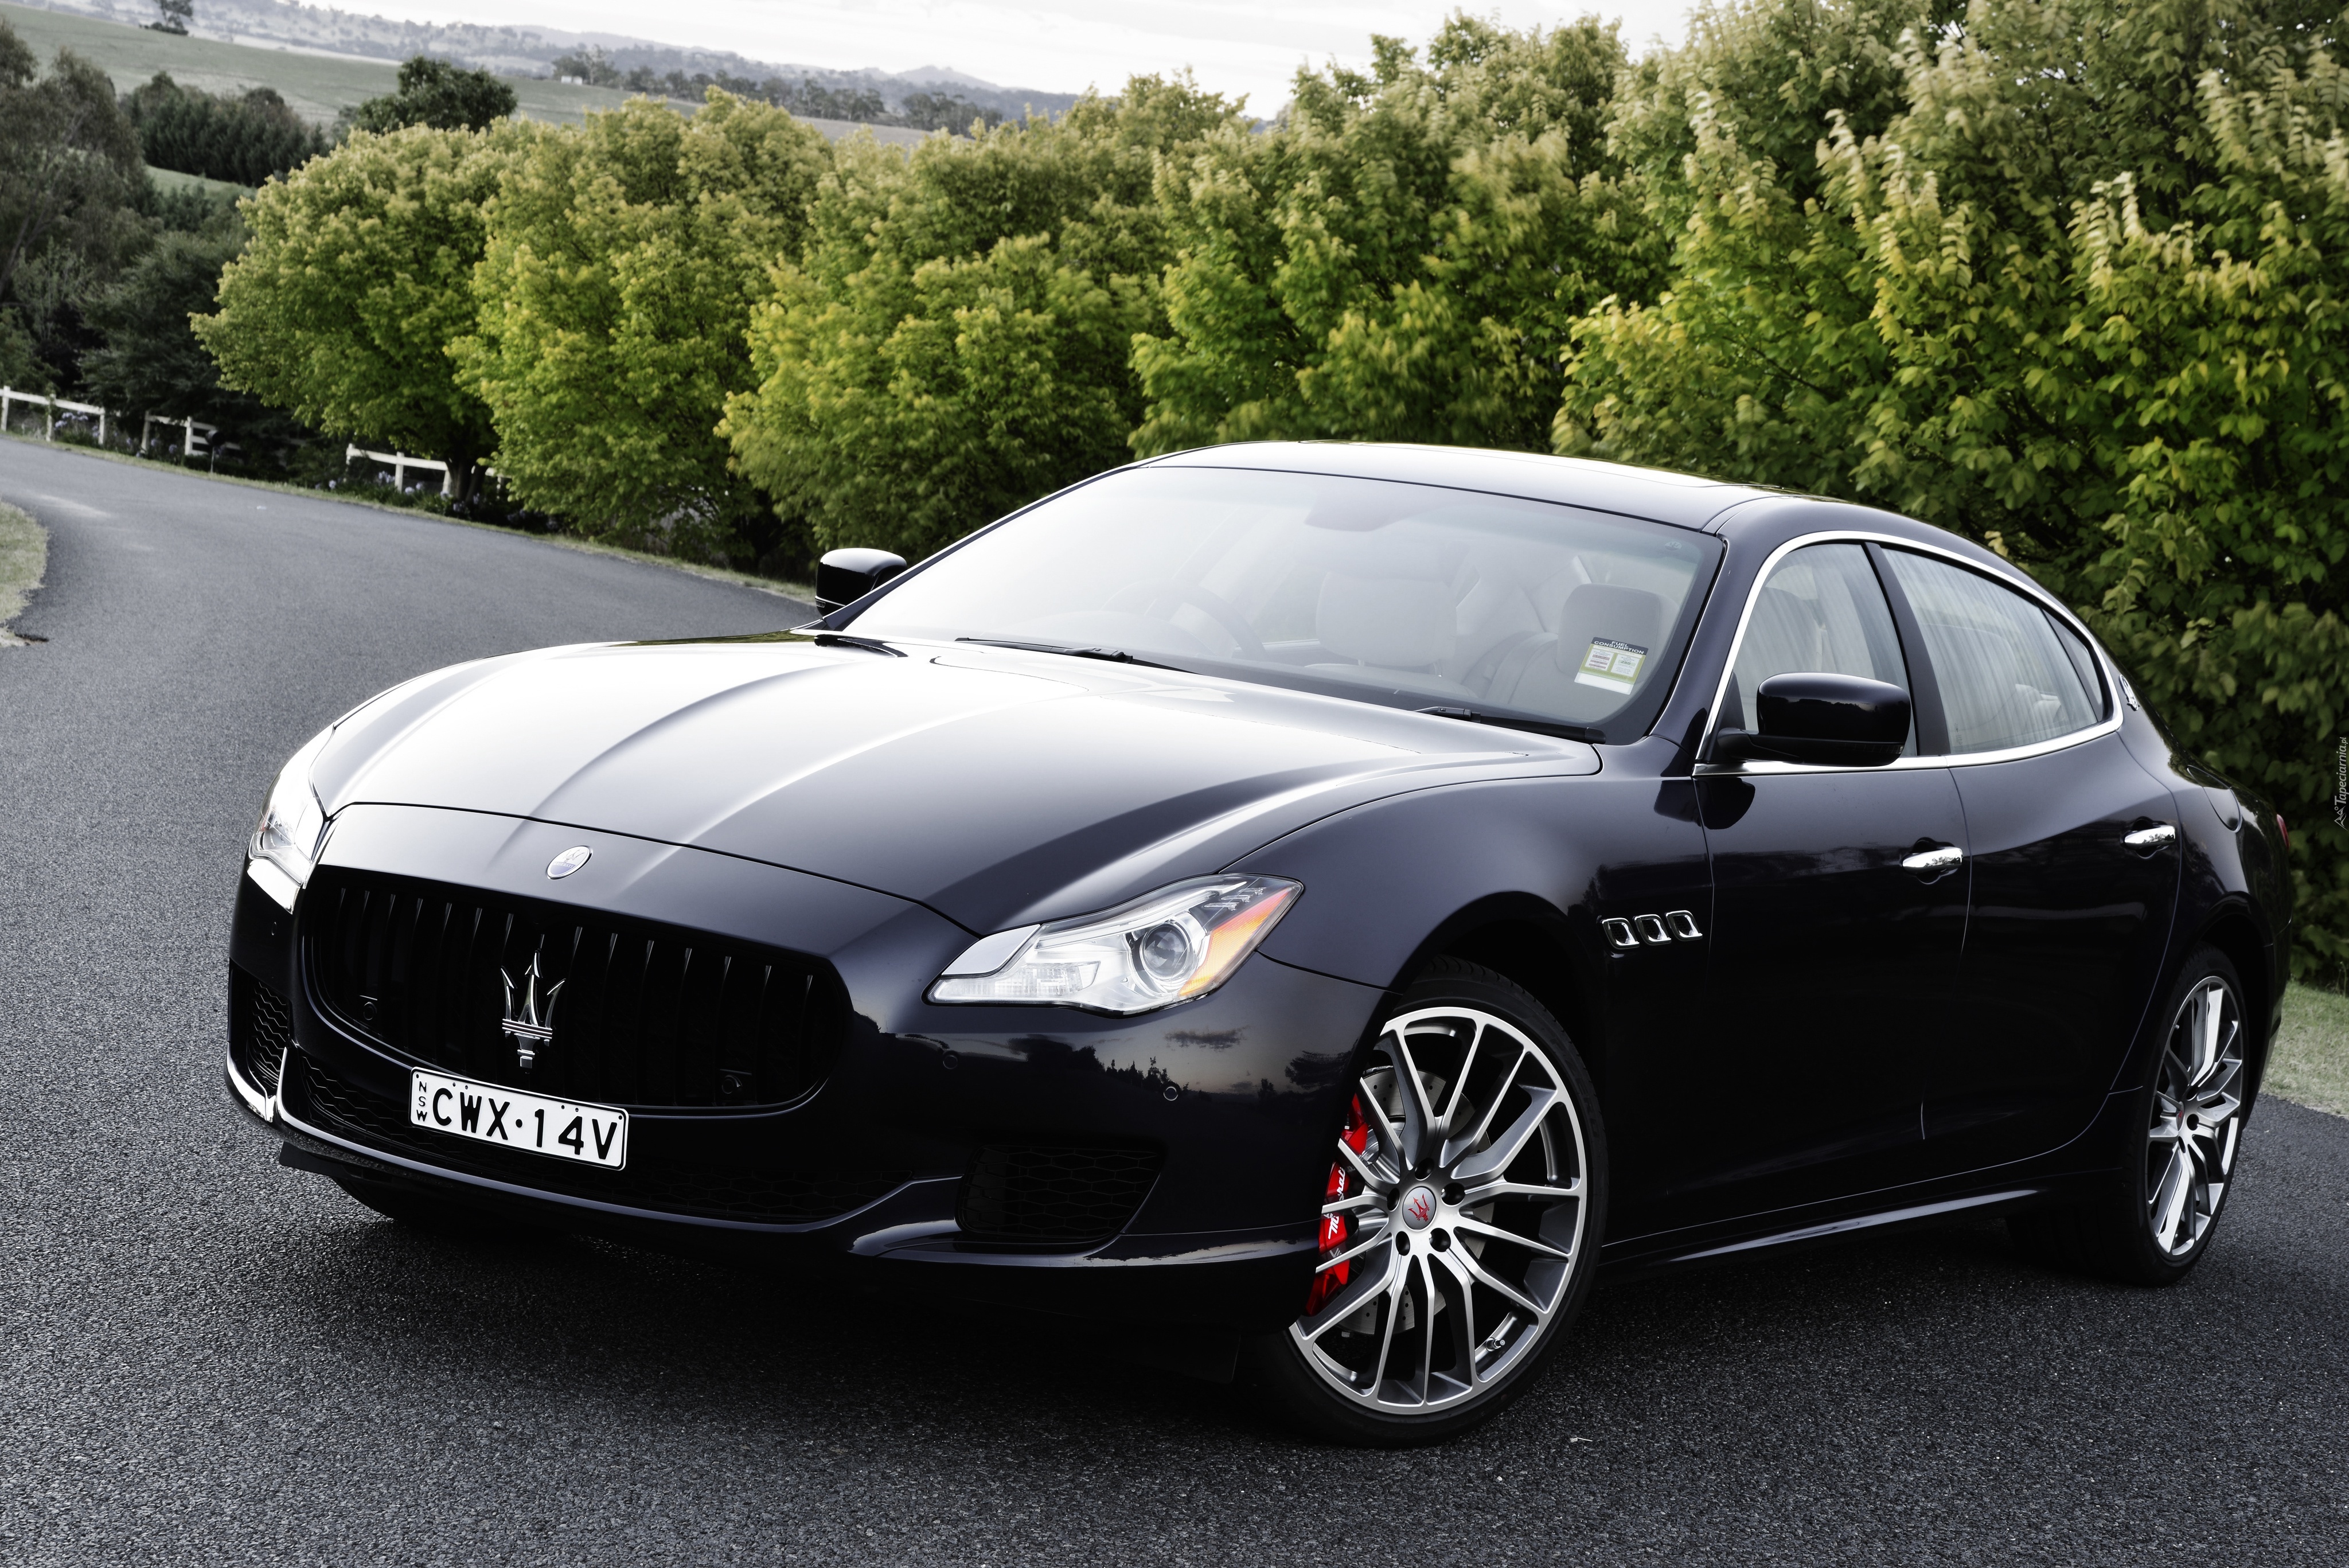 Samochód, Maserati